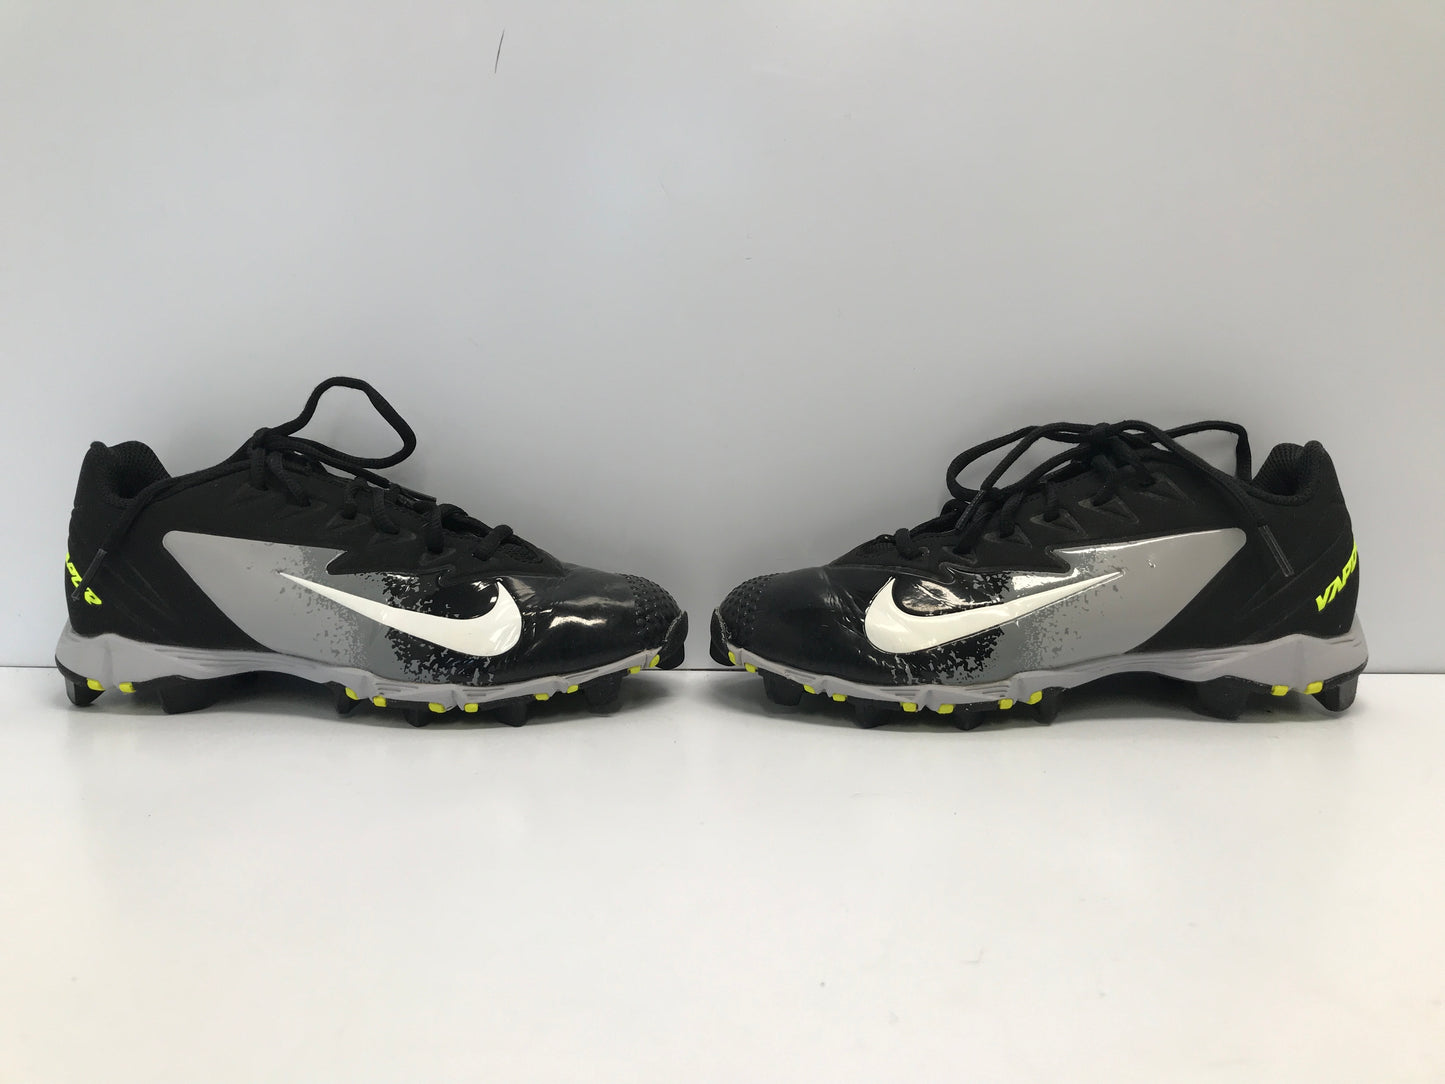 Baseball Shoes Cleats Child Size 5.5 Nike Vapor Black Grey Lime Mild Wear